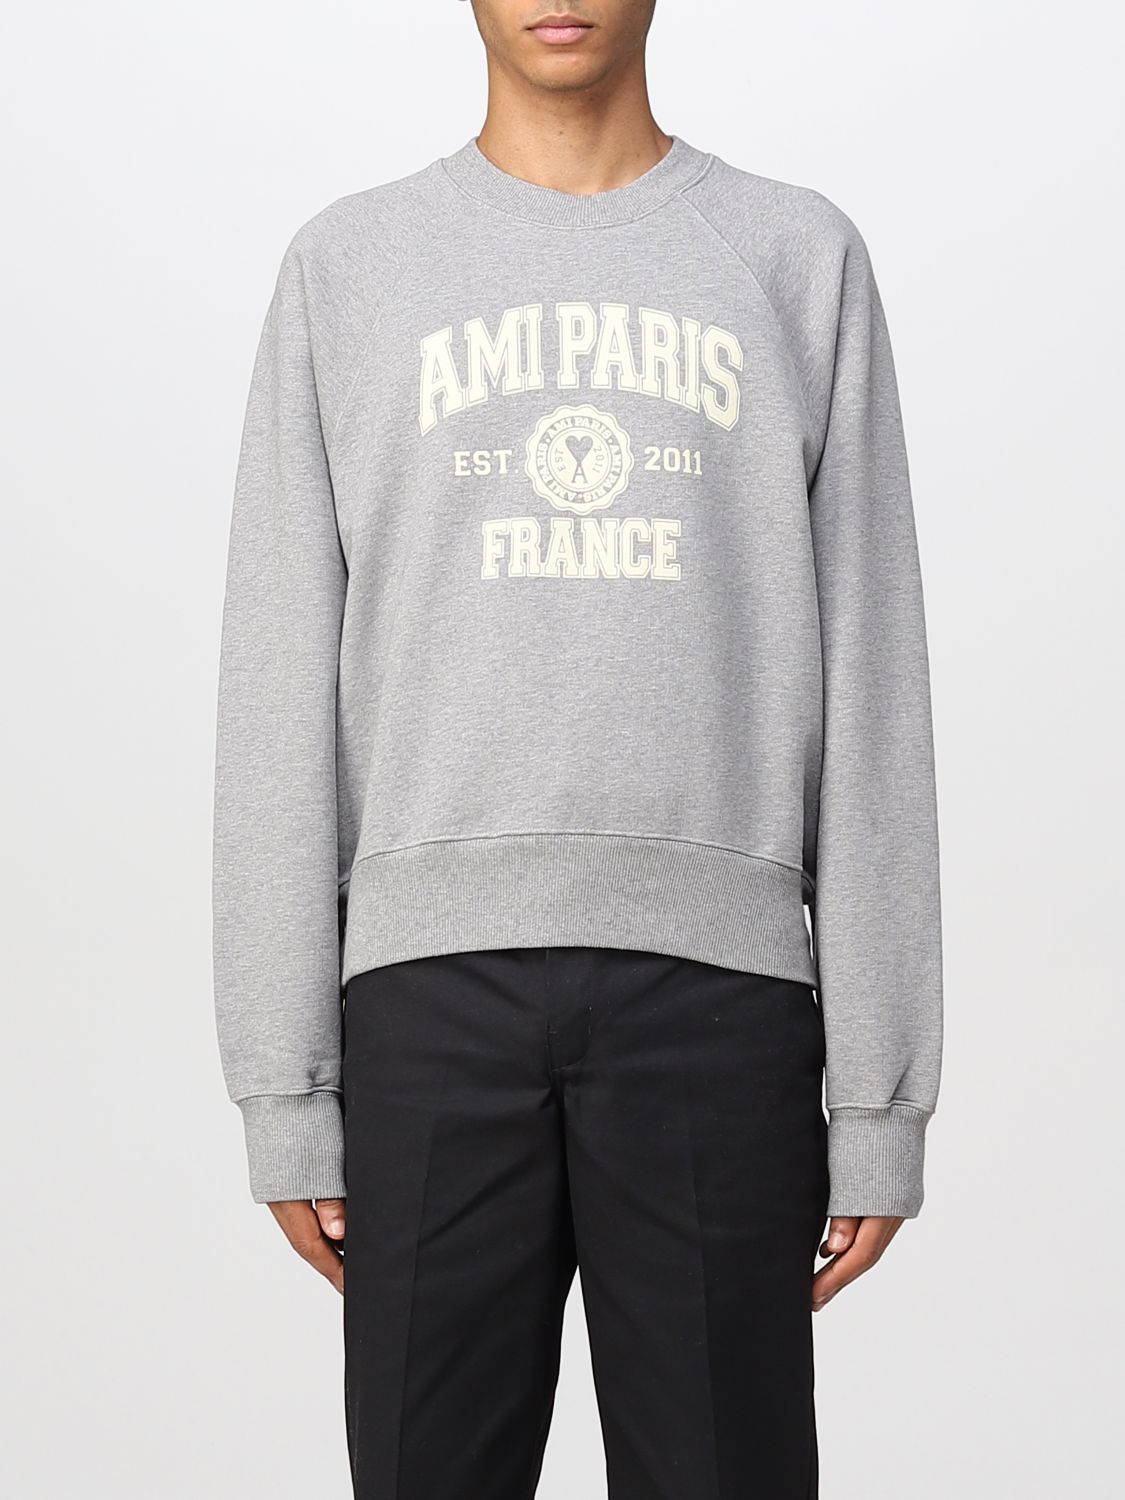 Vild Tilbageholde Tectonic AMI PARIS: sweatshirt for man - Grey | Ami Paris sweatshirt USW0102747  online on GIGLIO.COM